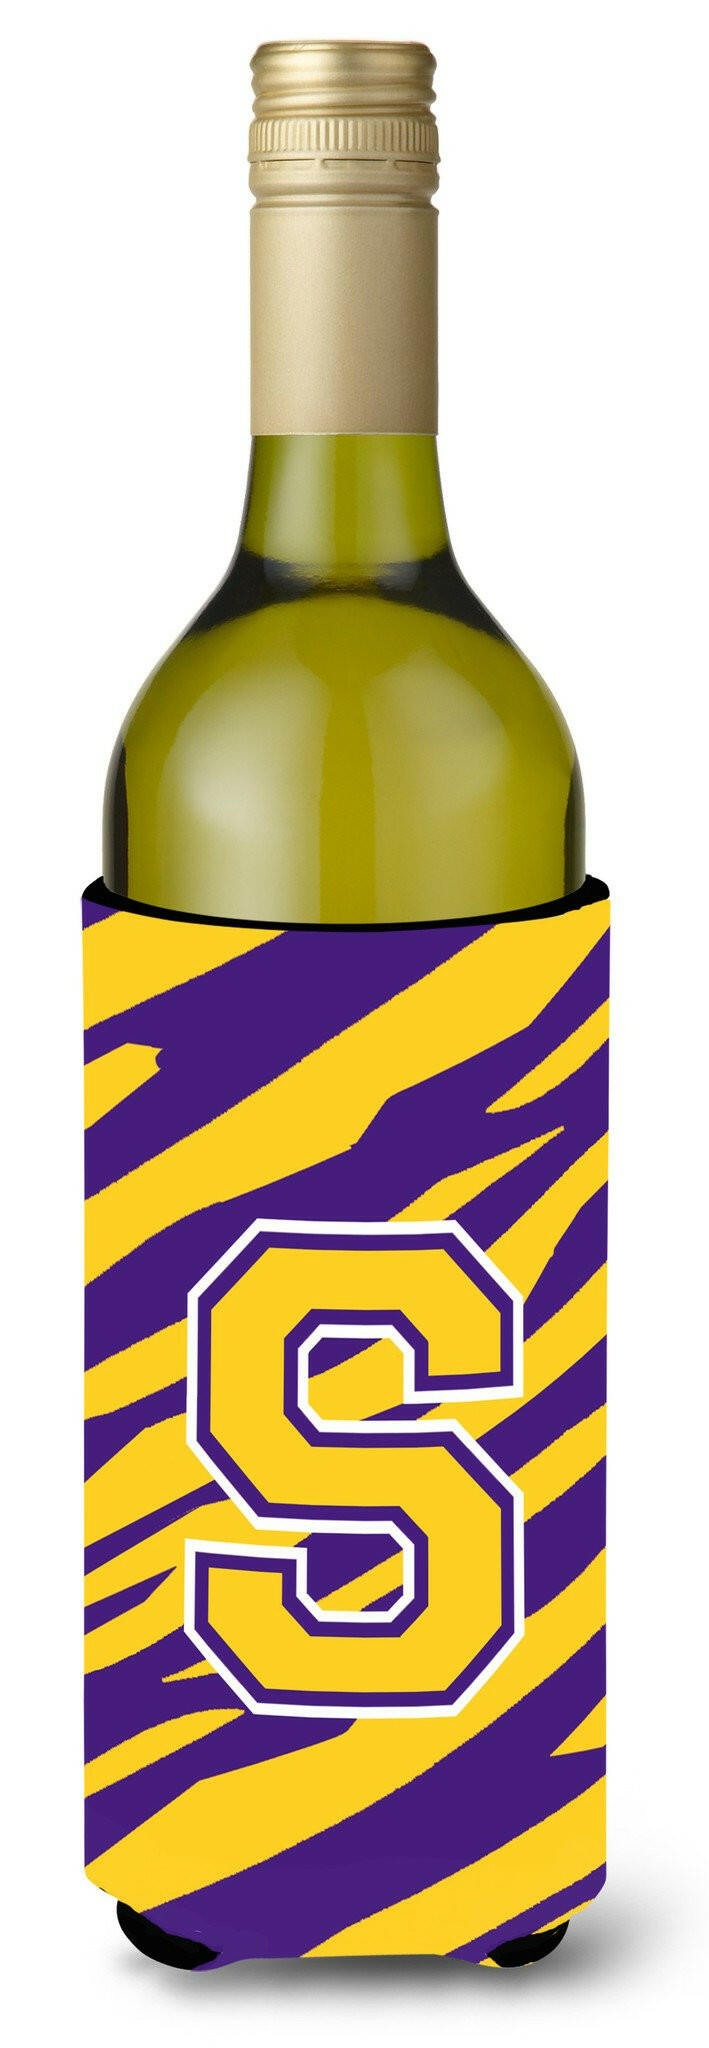 Monogram - Tiger Stripe - Purple Gold  Initial S Wine Bottle Beverage Insulator Beverage Insulator Hugger by Caroline's Treasures